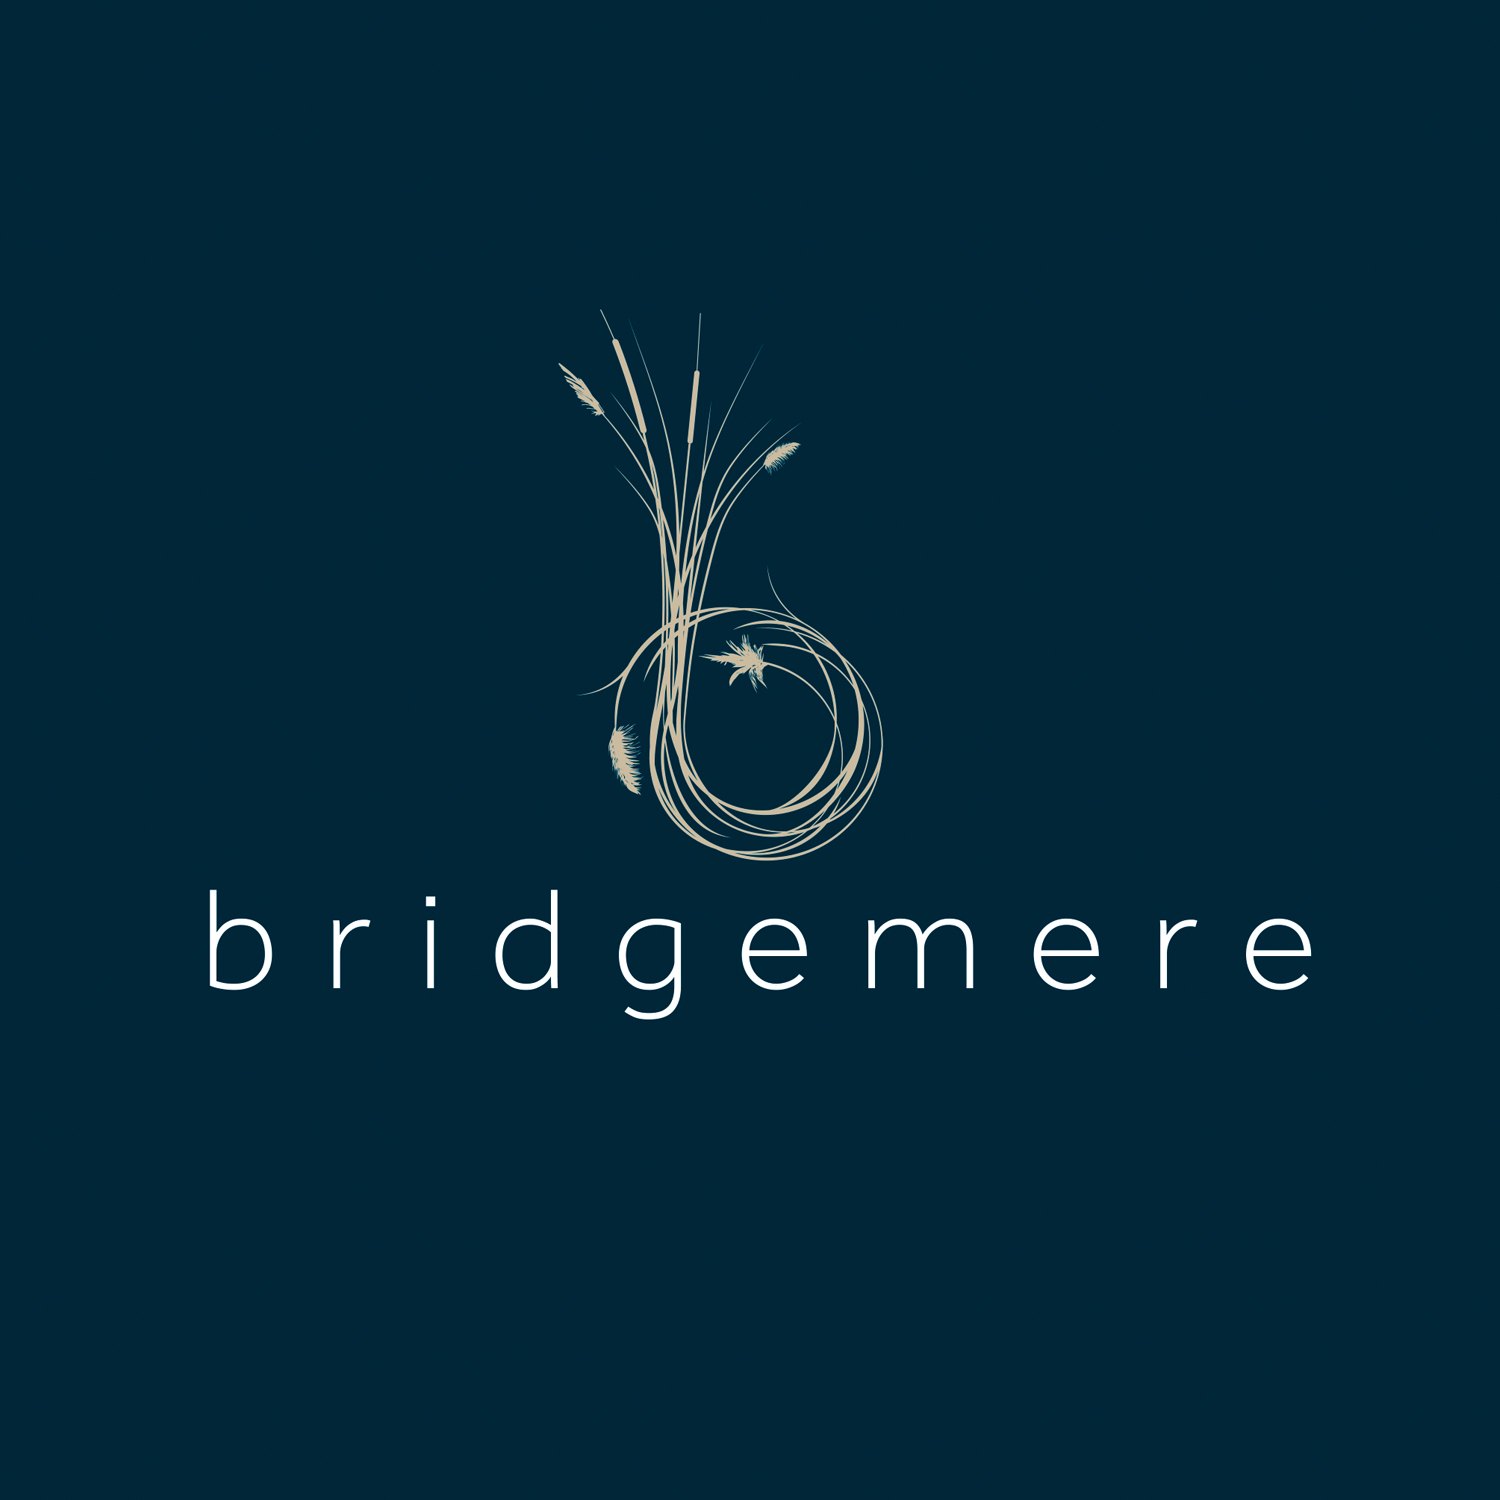 bridgemere burscough